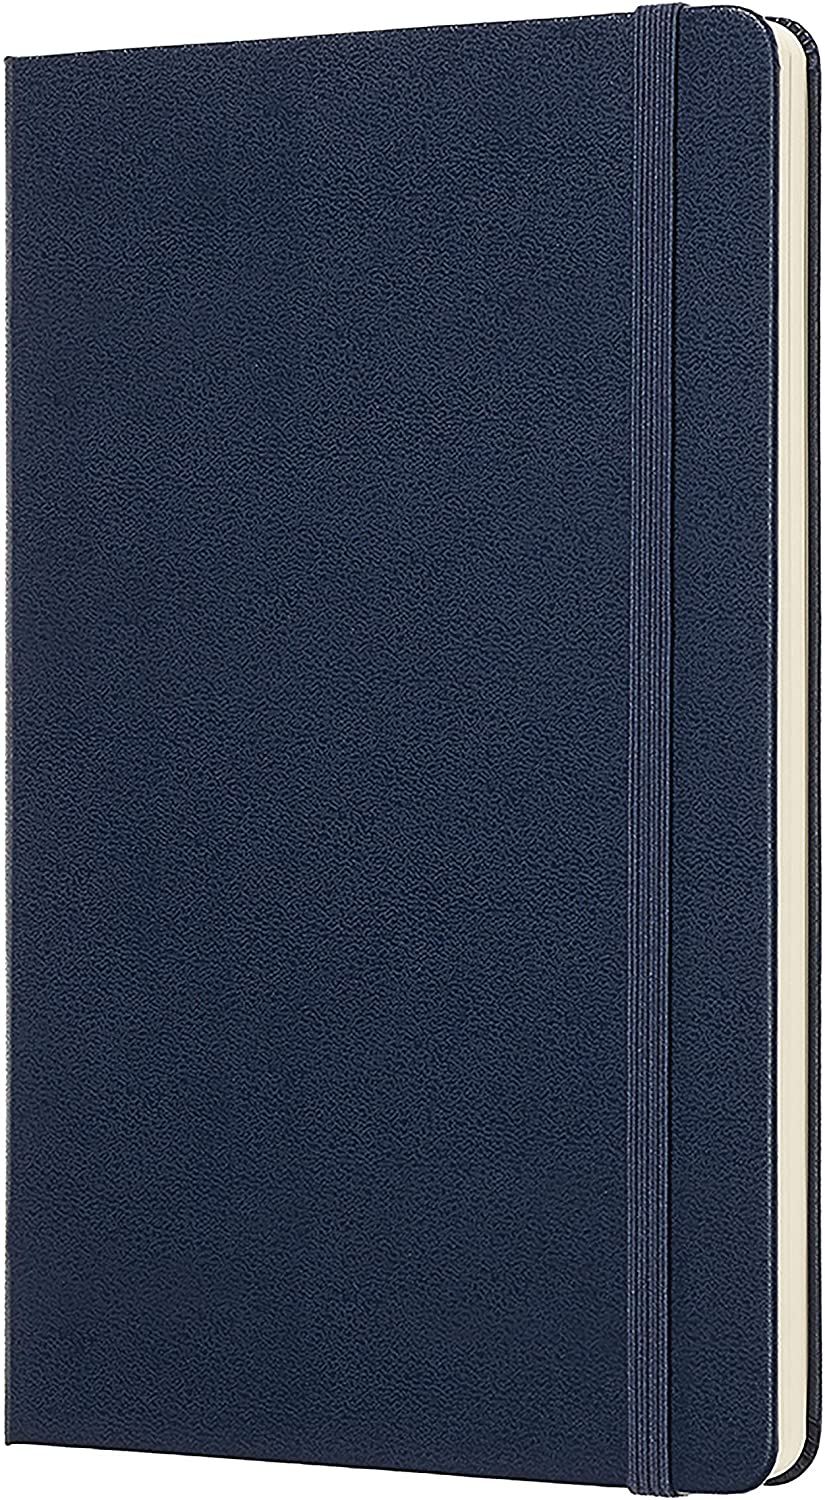 Carnet - Moleskine Classic - Dotted, Large, Hard Cover - Sapphire Blue | Moleskine image1